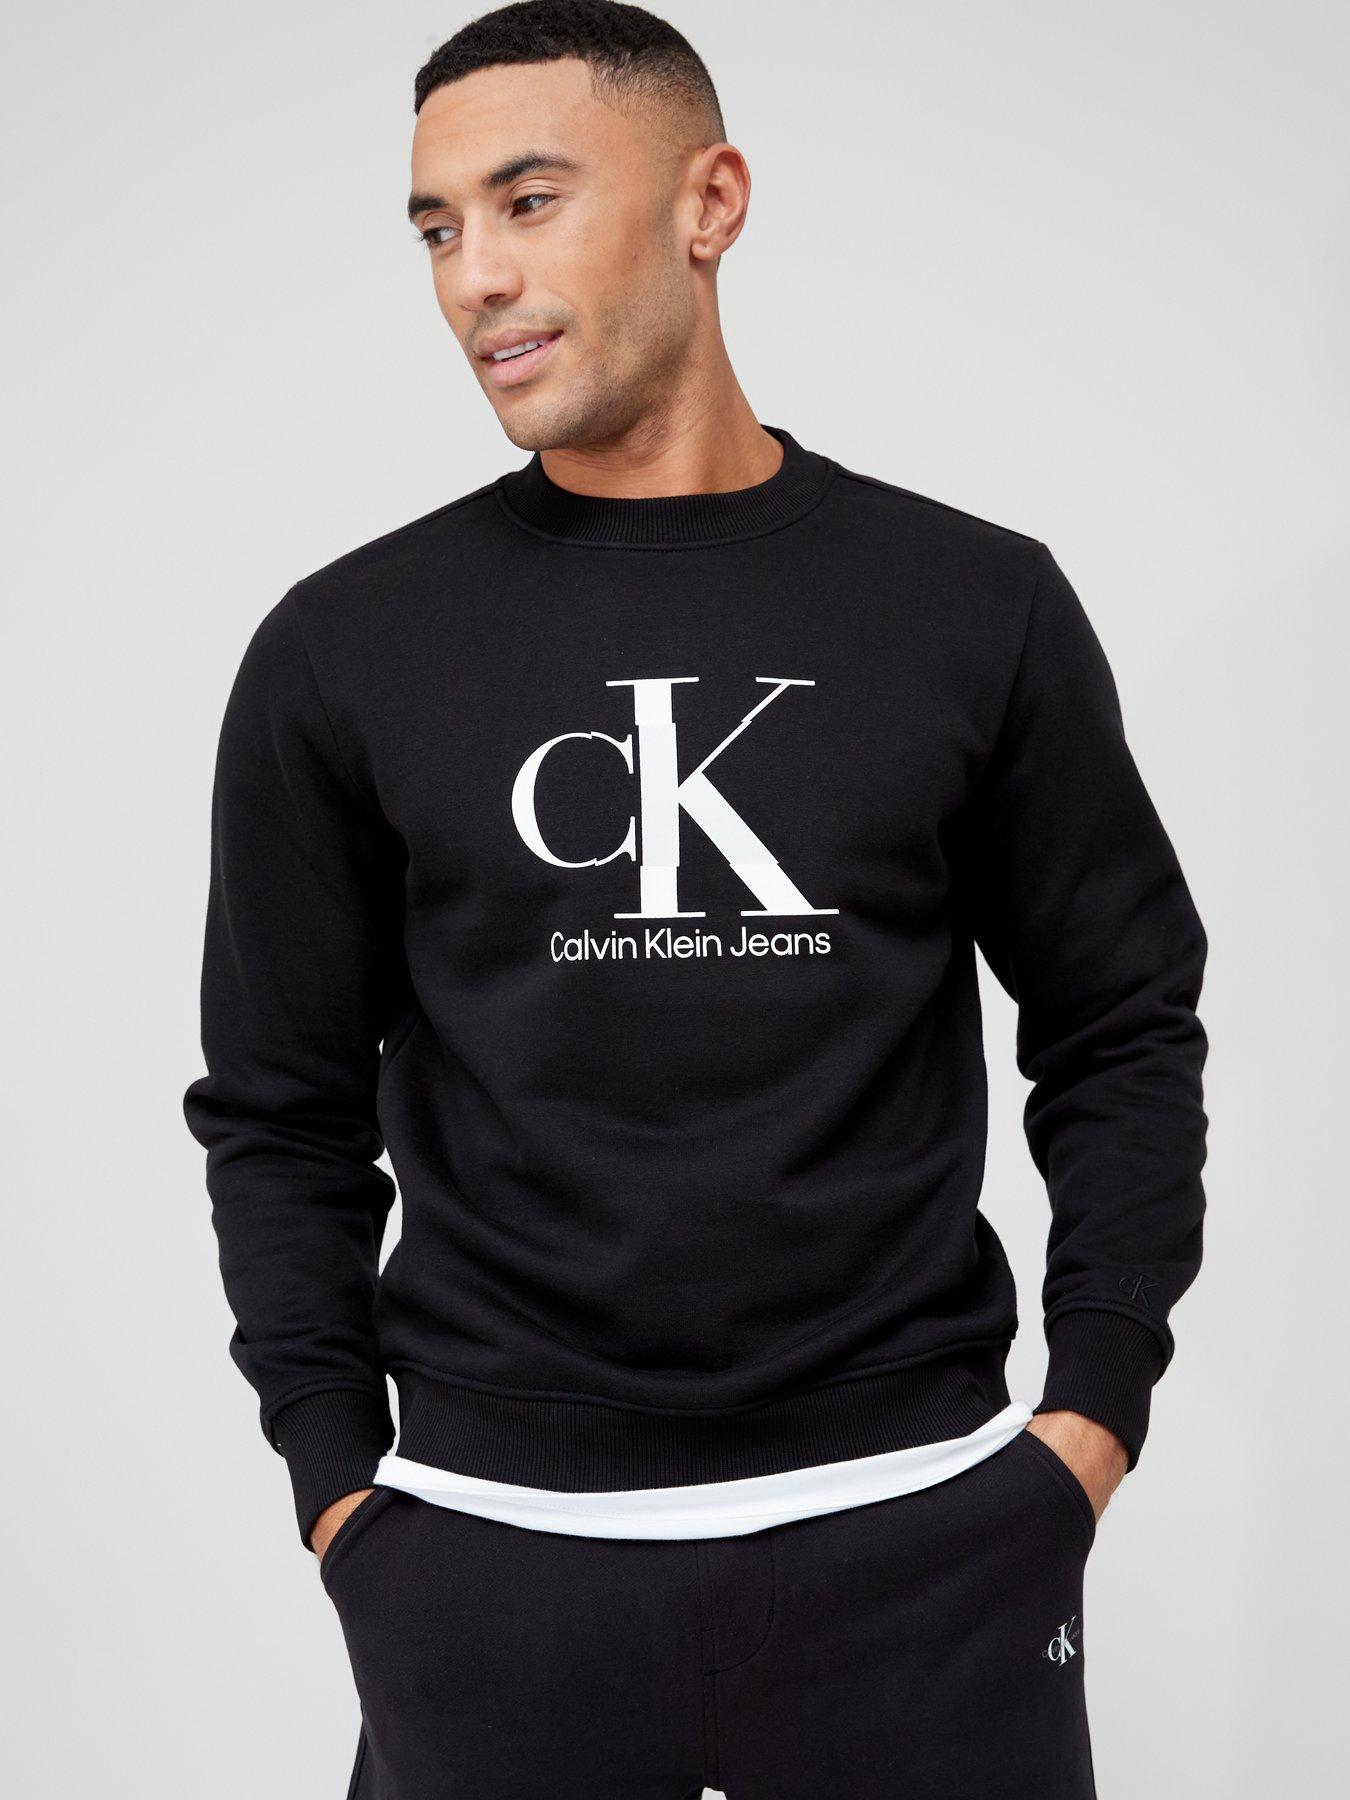 Calvin klein | Hoodies & sweatshirts | Men | Very Ireland